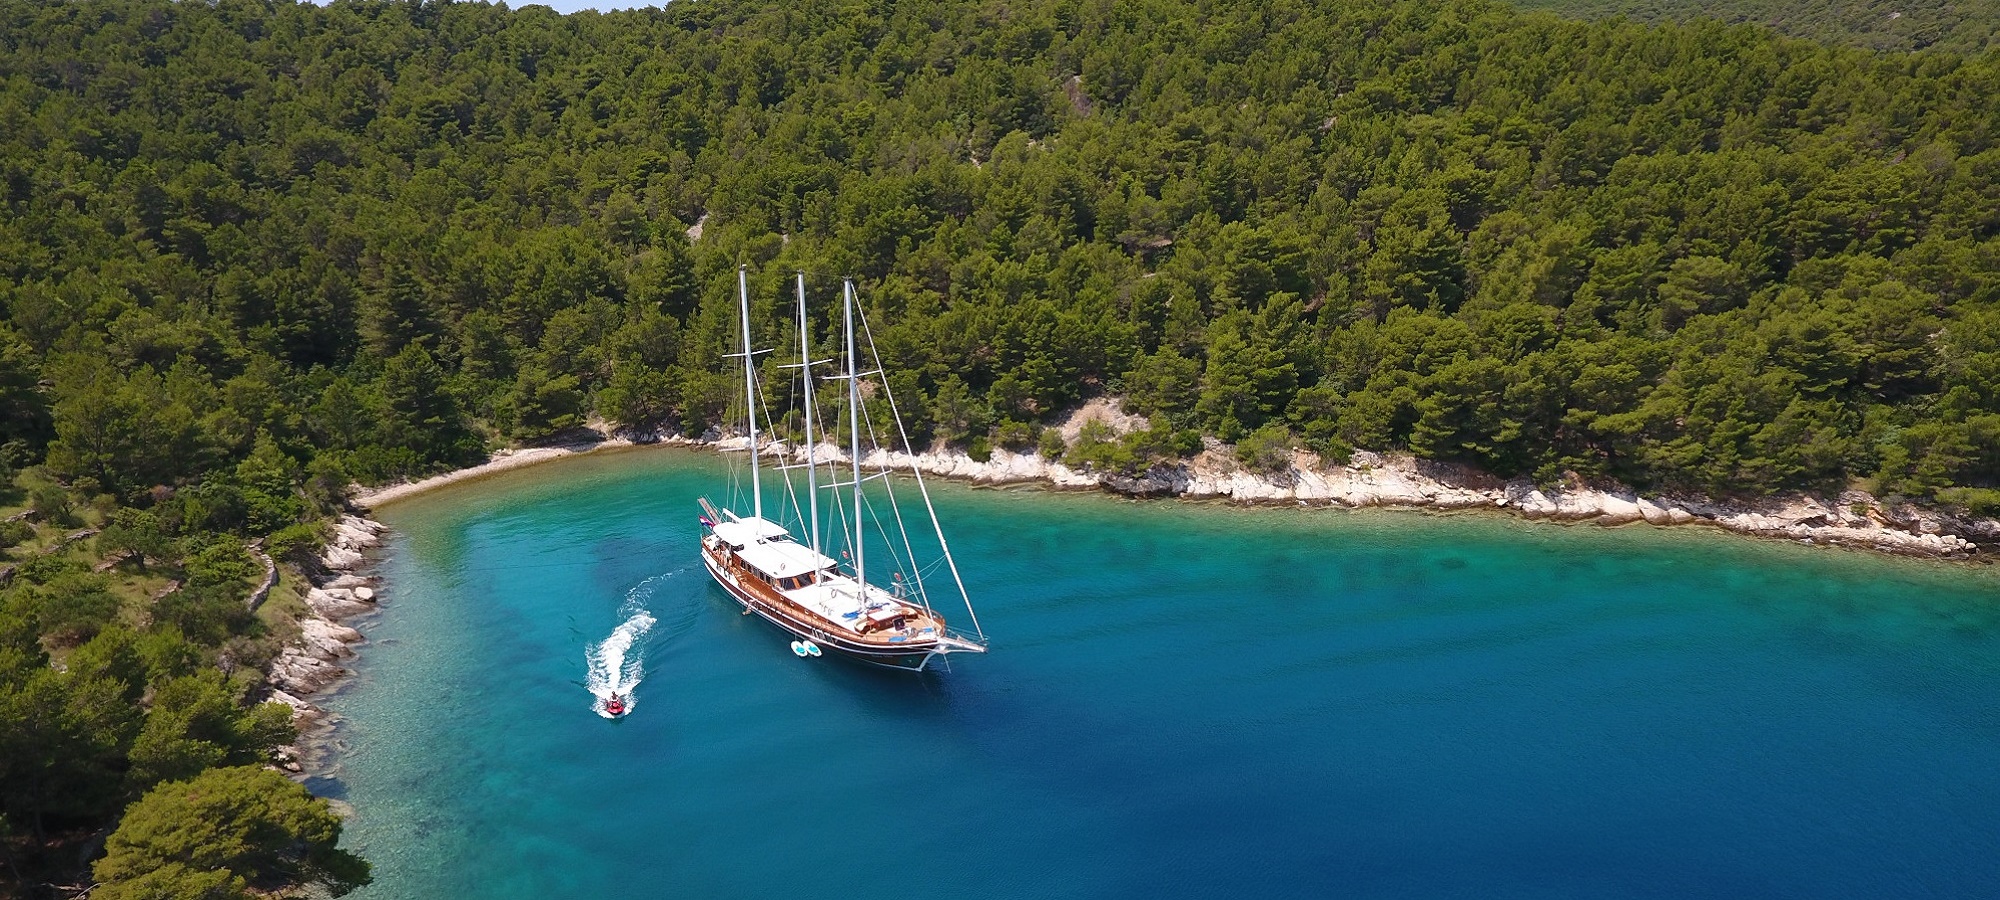 Charter a Yacht or Gulet in Croatia